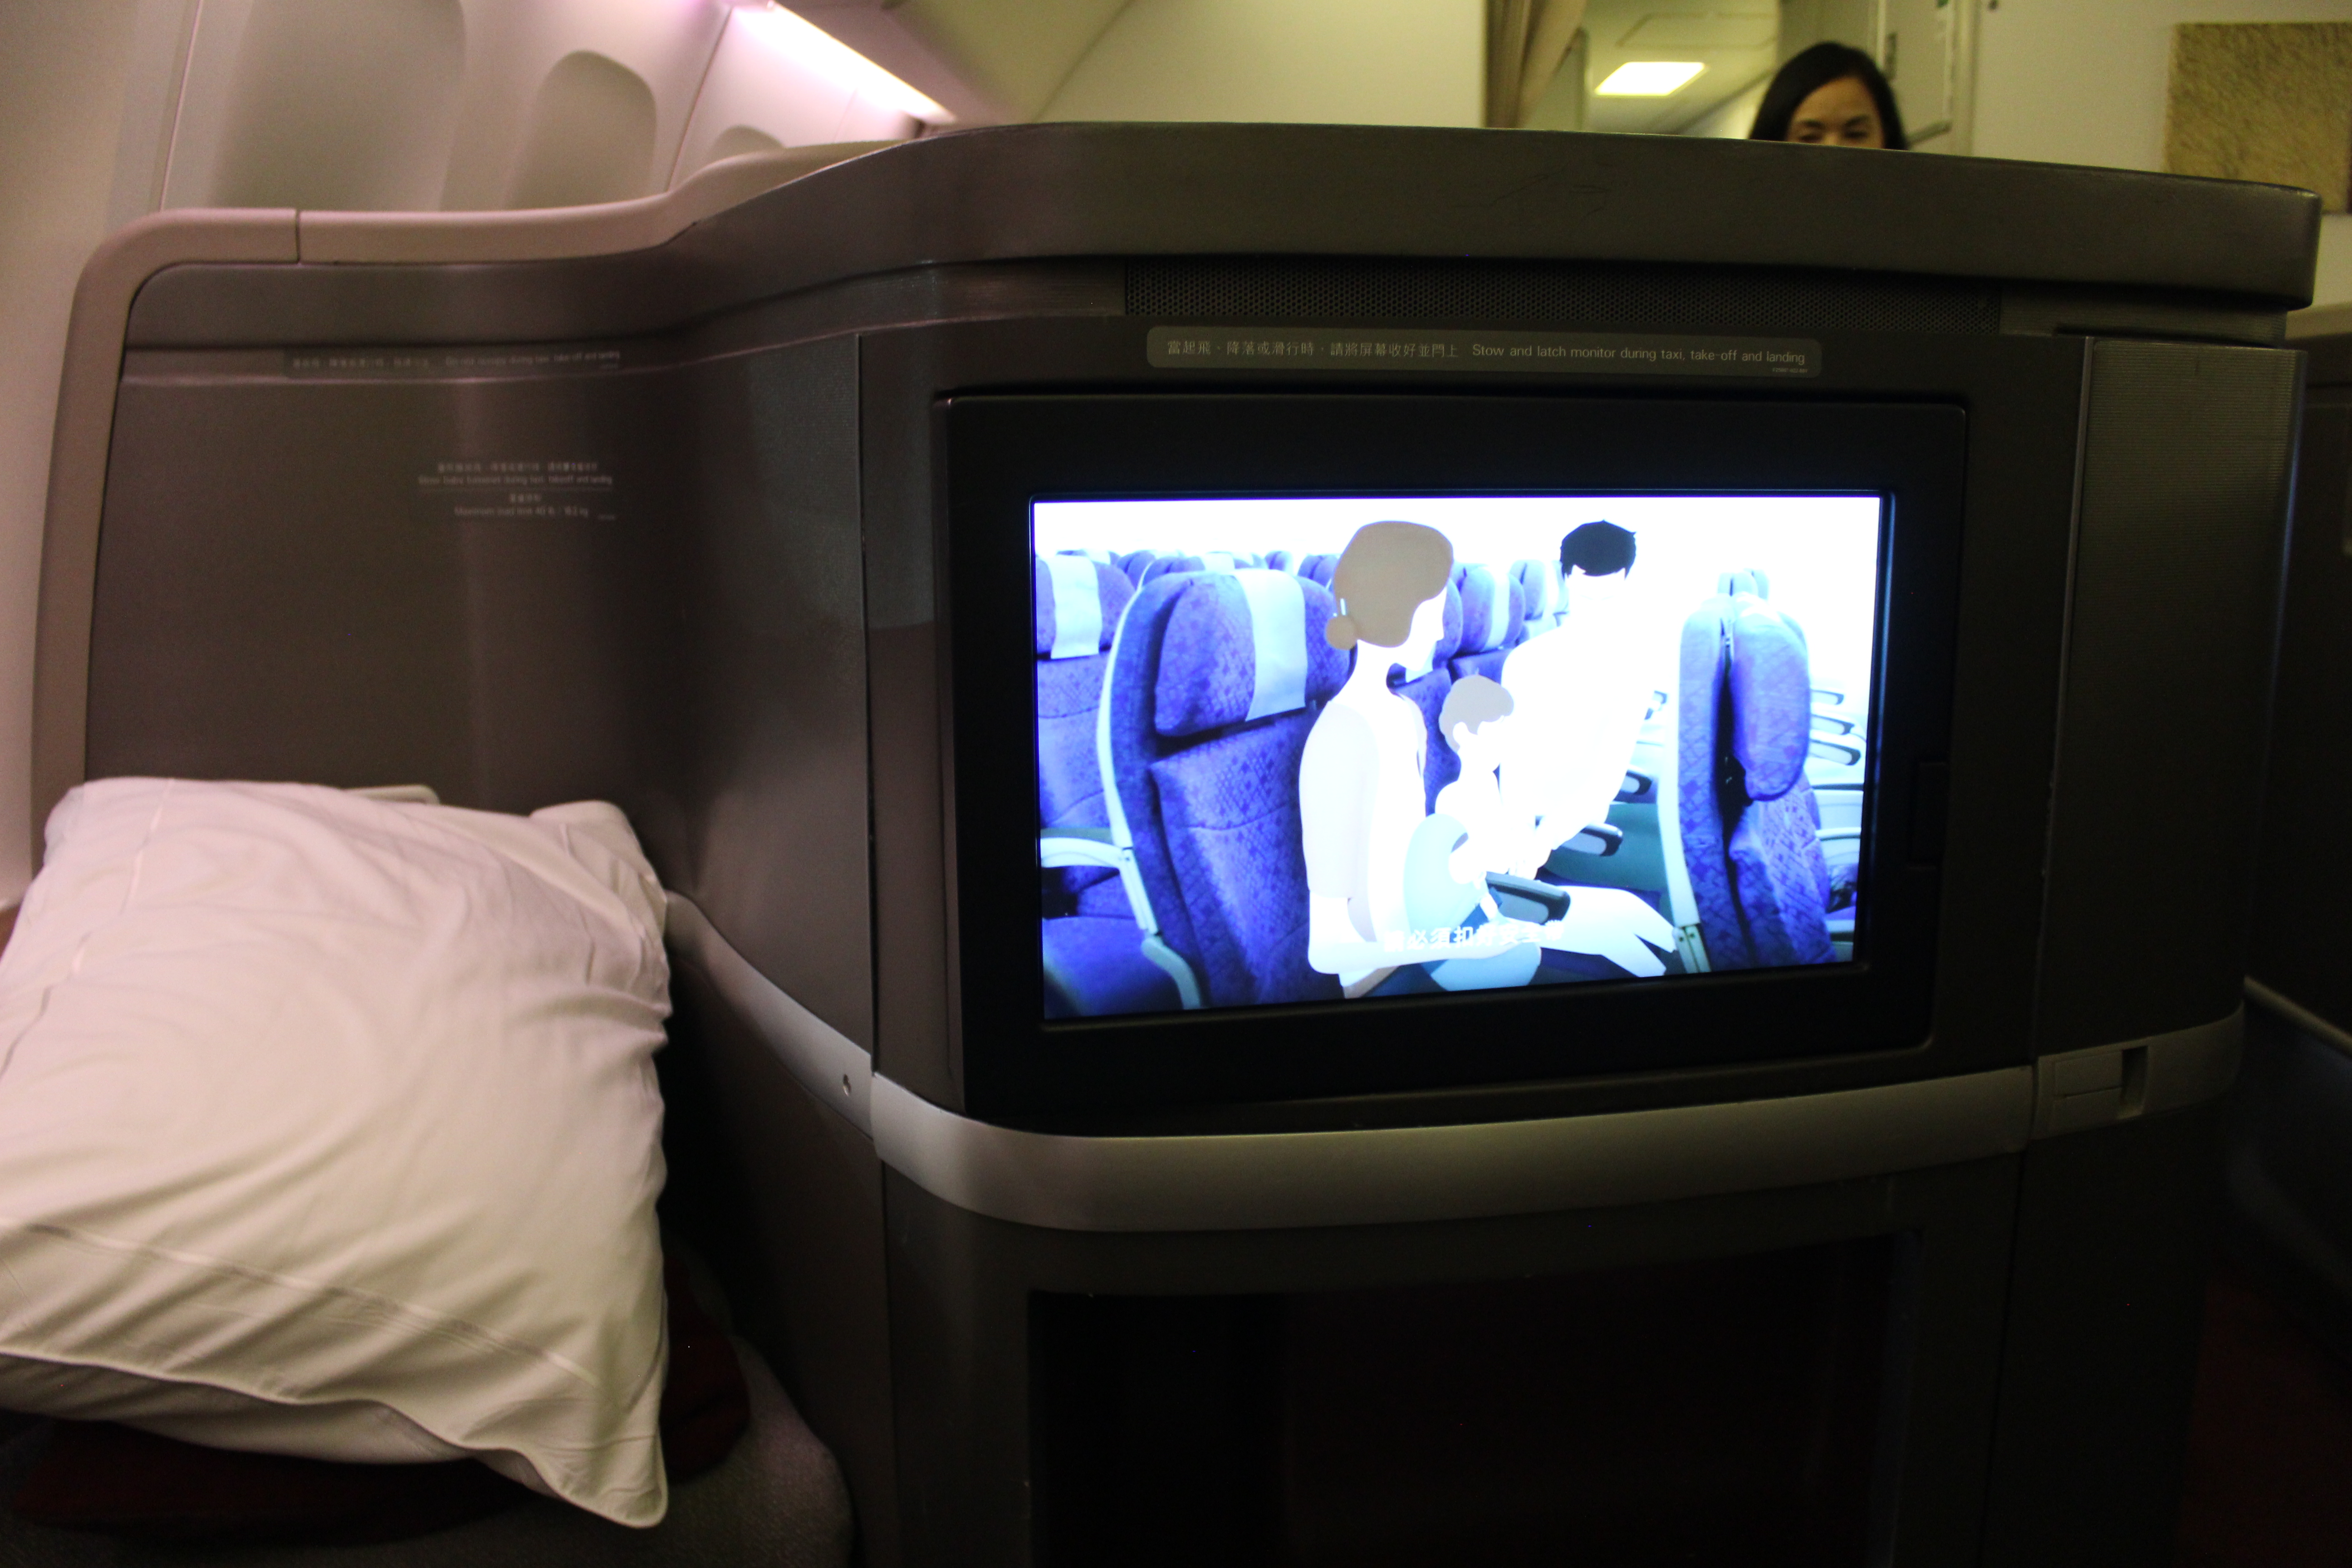 a tv on a plane